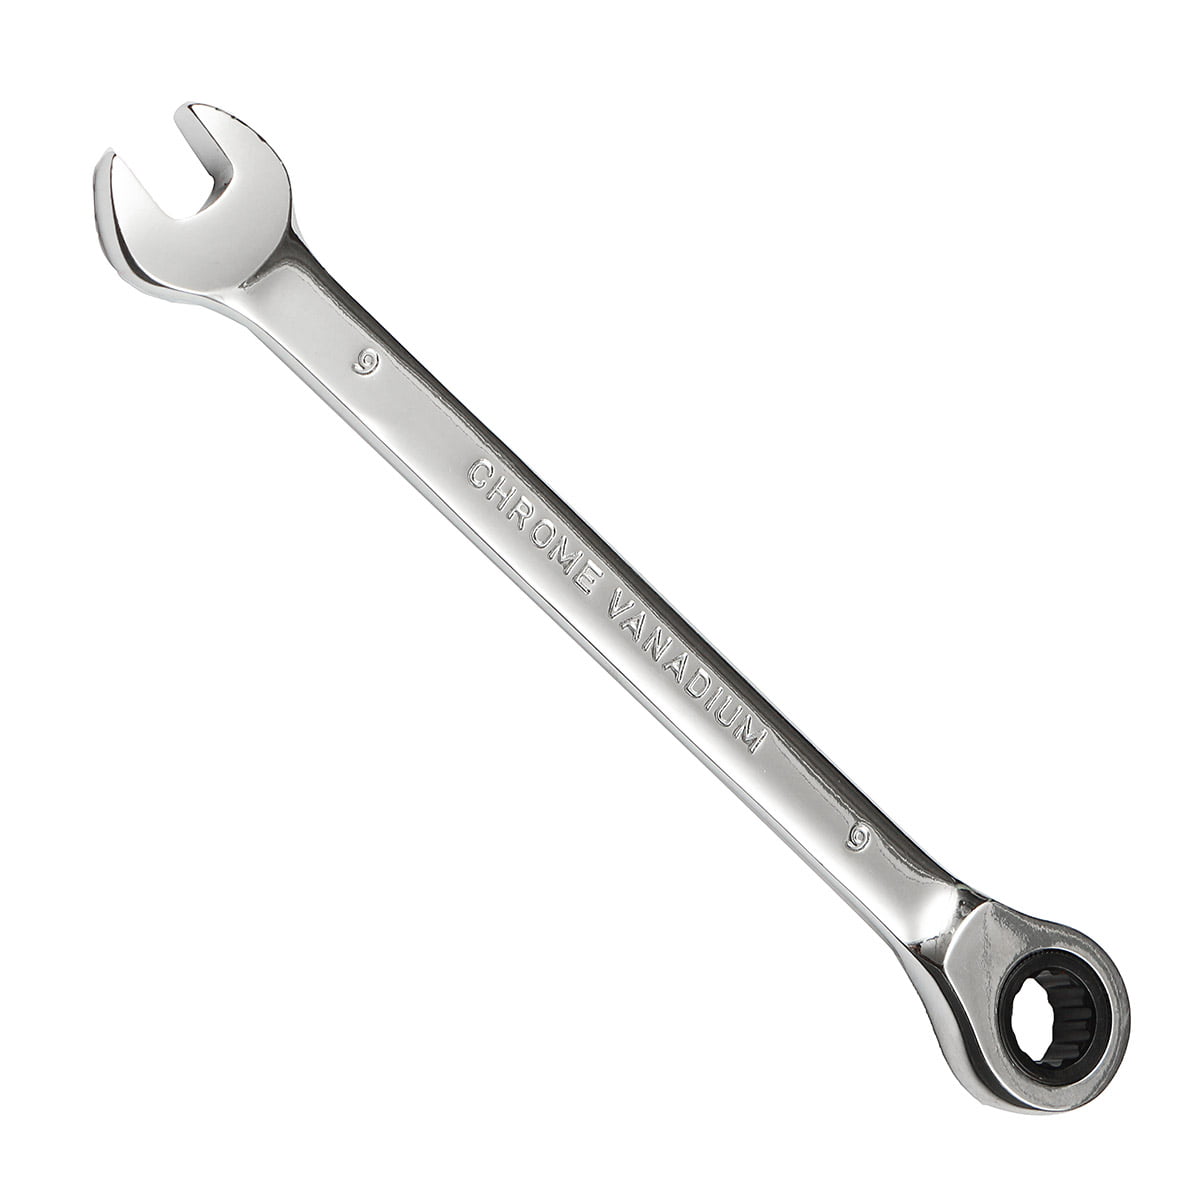 6mm-32mm gear wrench chrome vanadium steel metric fixed head ratchet wrench tool 